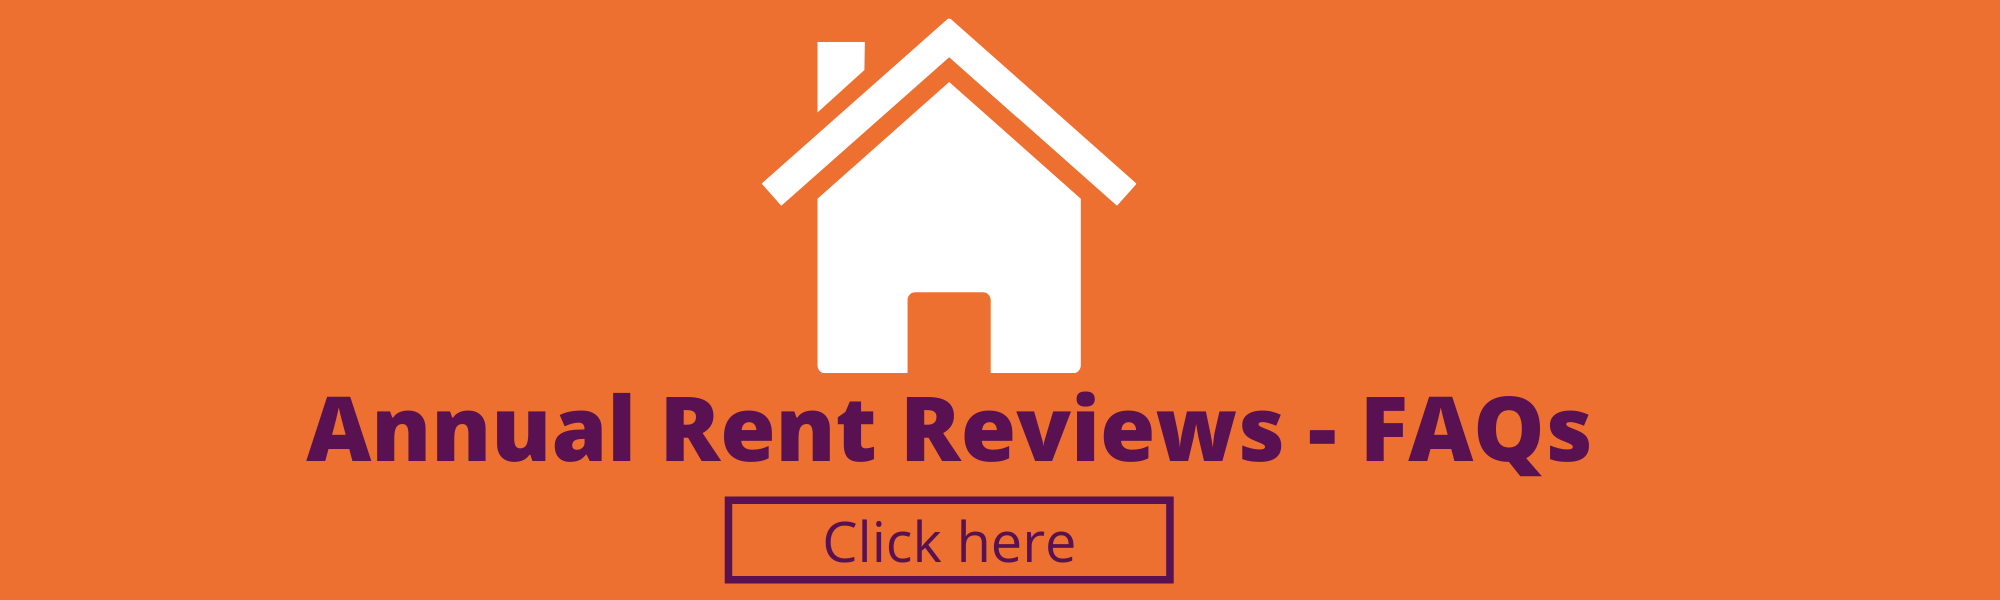 Annual rent reviews - FAQs